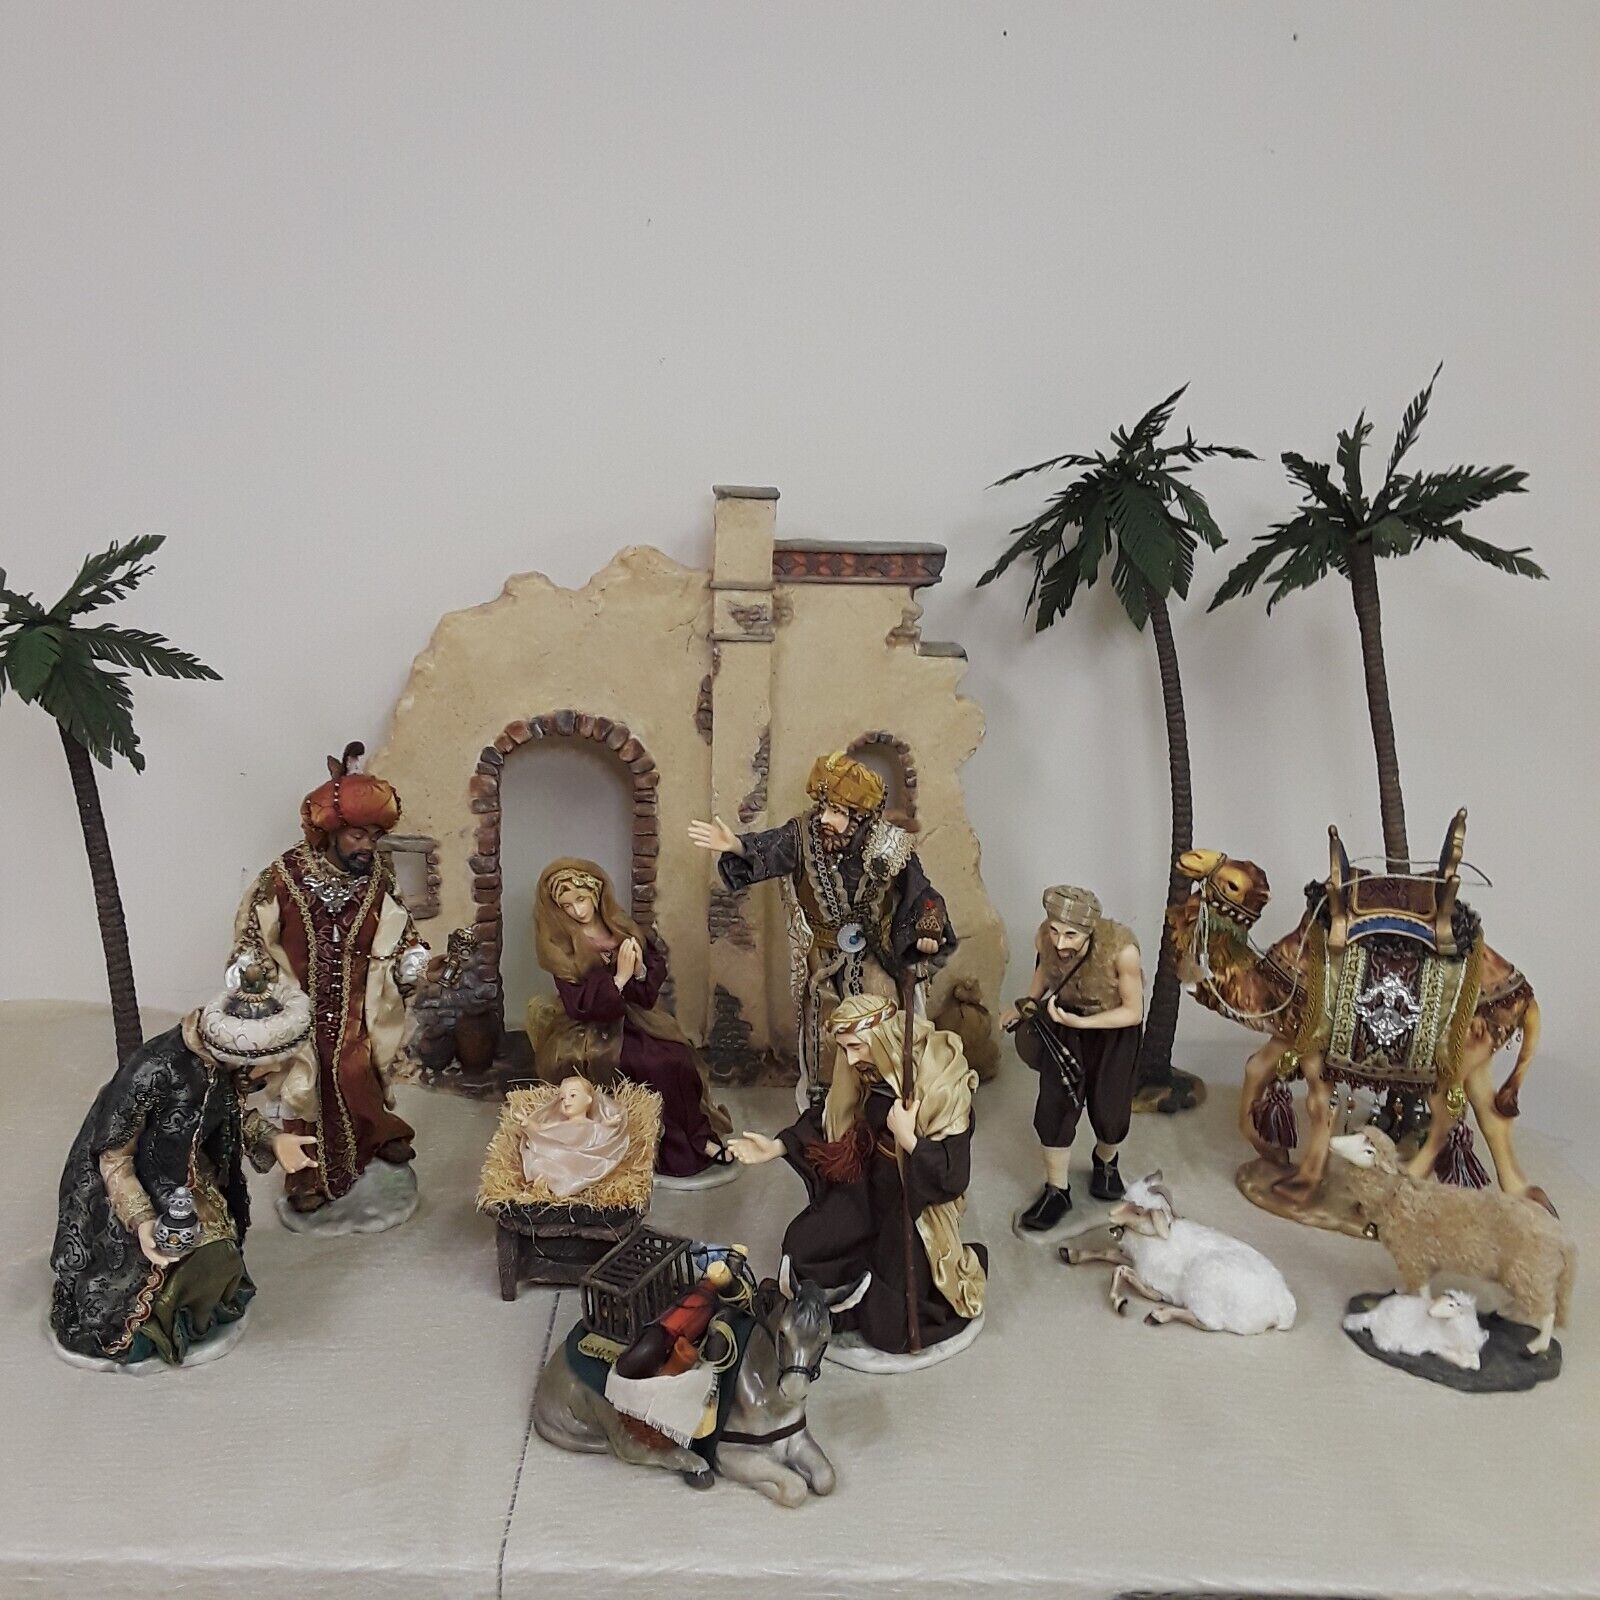 Enormous Fine Porcelain Christmas Nativity Set Hand Painted in Epic Detail